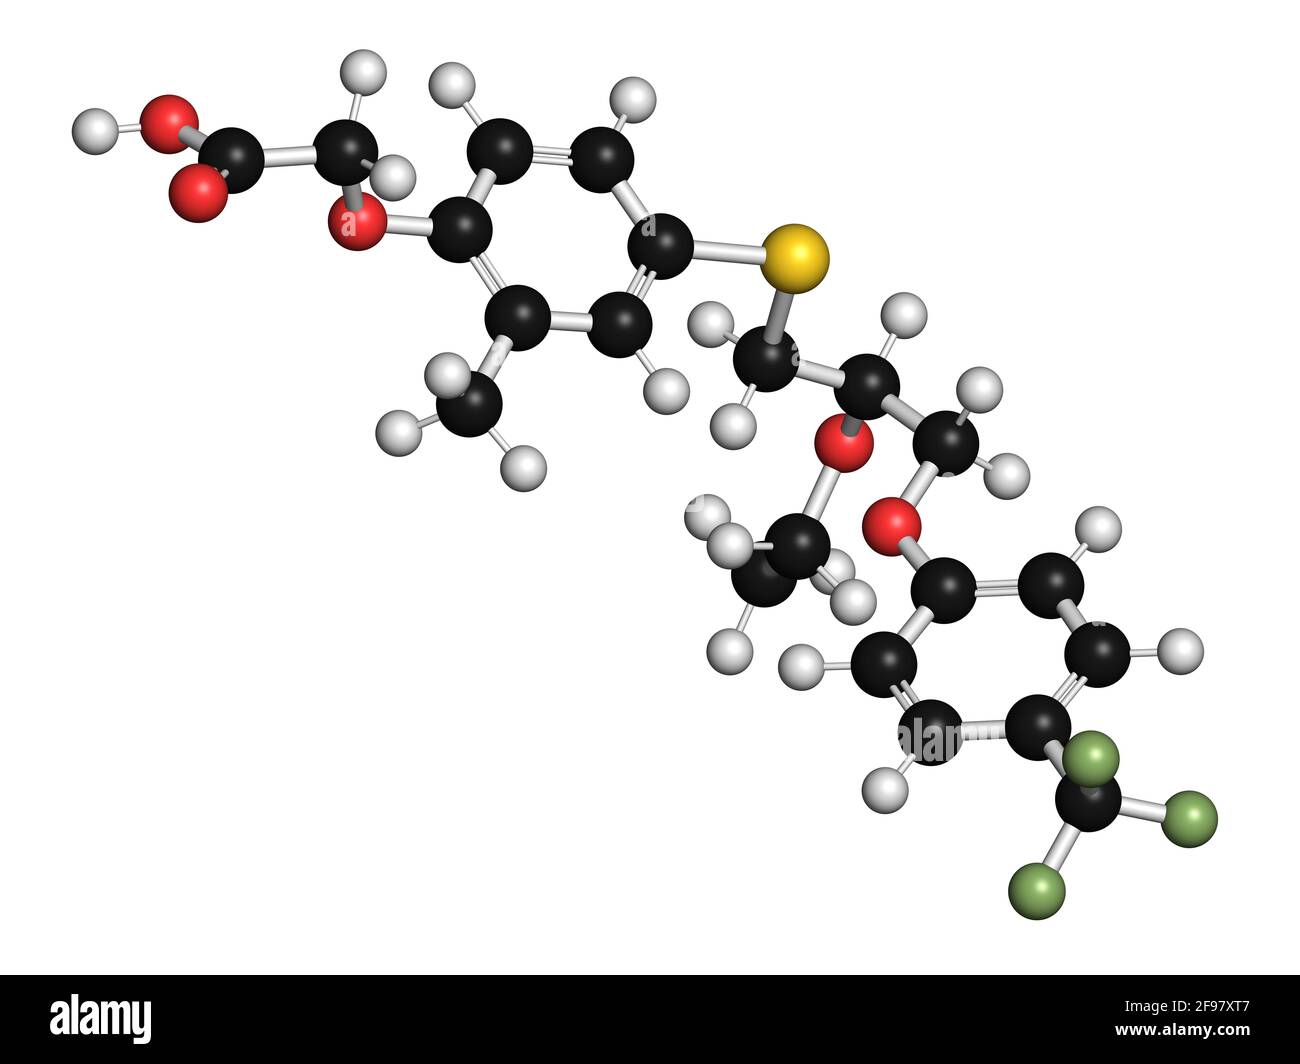 Seladelpar drug molecule, illustration Stock Photo